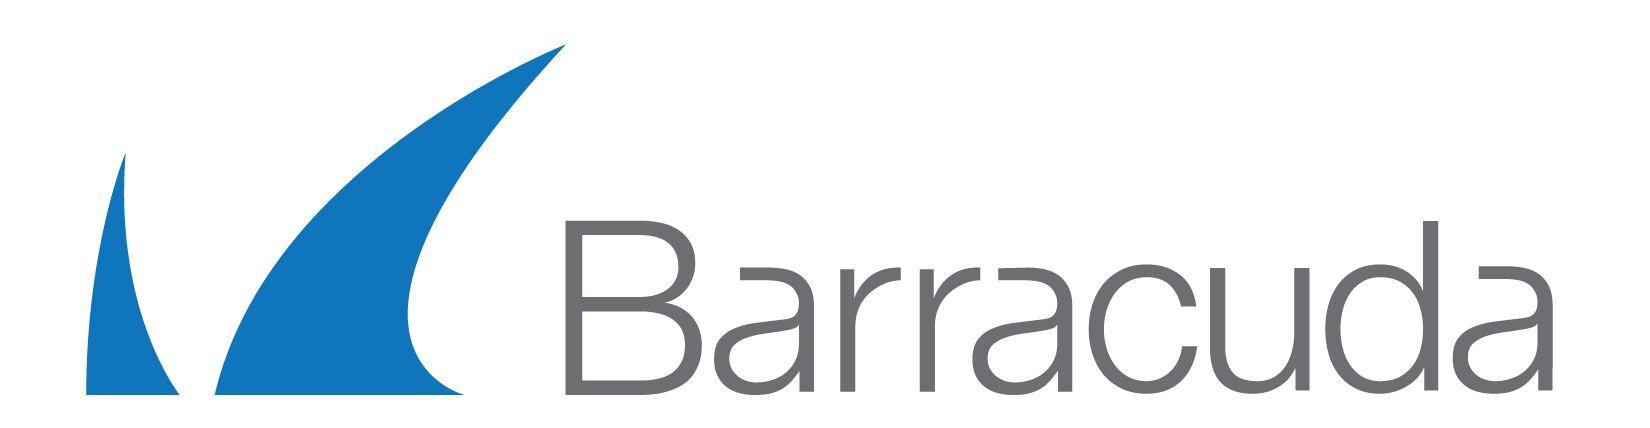 Barracuda Networks Logo - Barracuda Networks Inc. (NYSE:CUDA) a Big Buy after Earnings ...